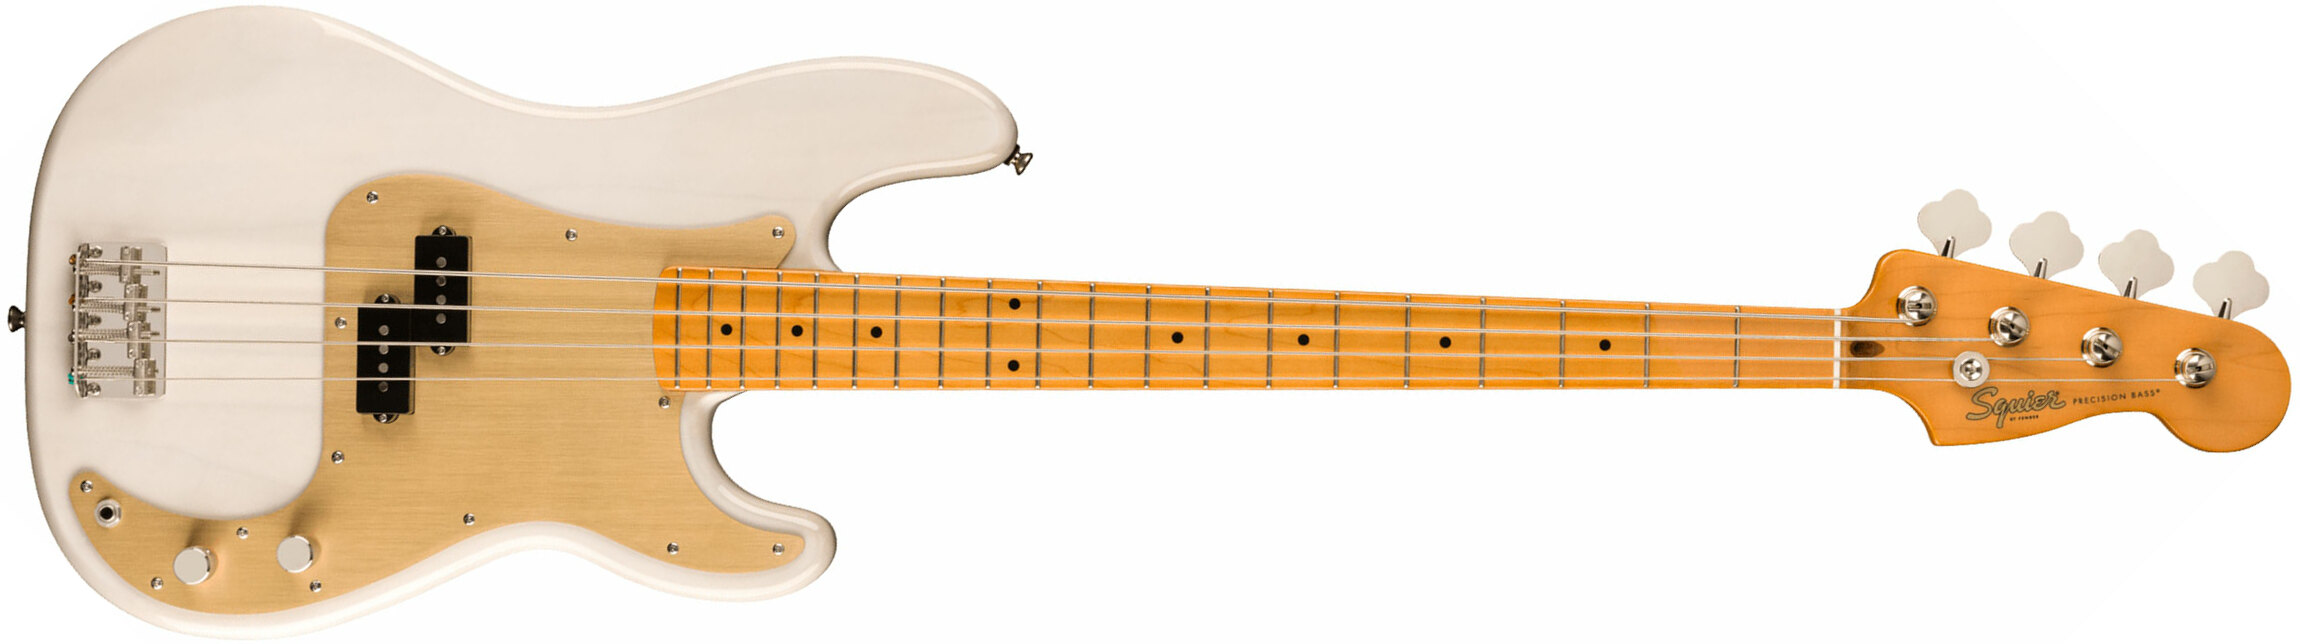 Squier Precision Bass Late '50s Classic Vibe Fsr Ltd Mn - White Blonde - Solid body elektrische bas - Main picture